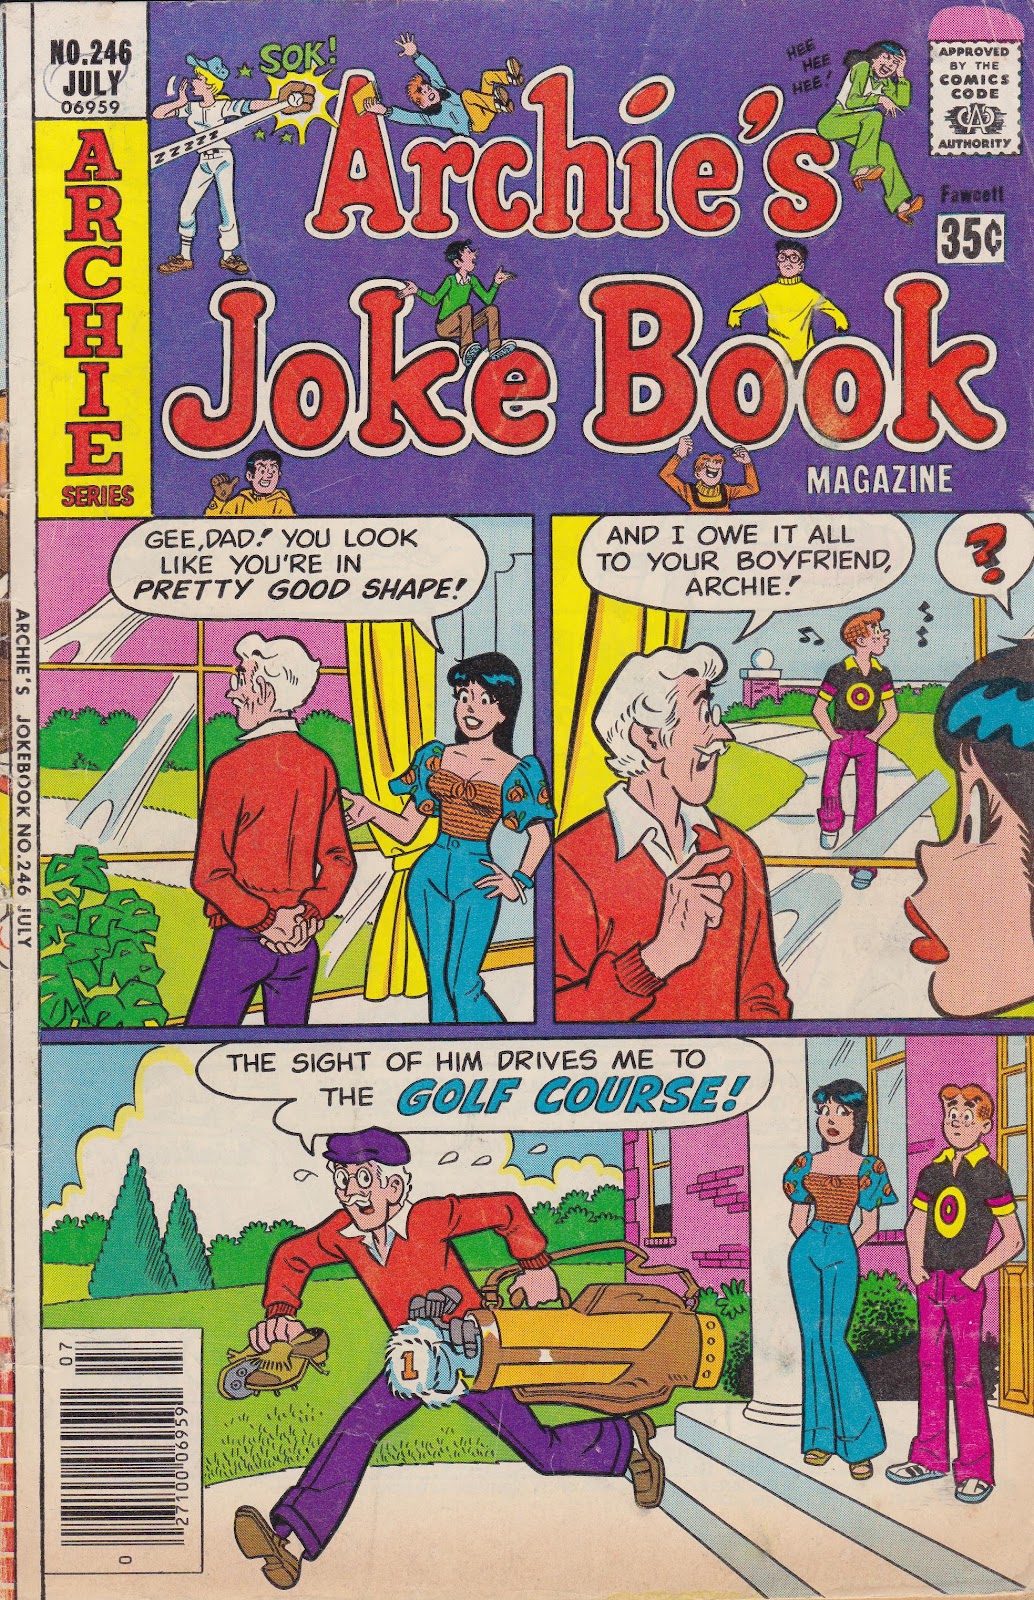 Archie's Joke Book Magazine issue 246 - Page 1